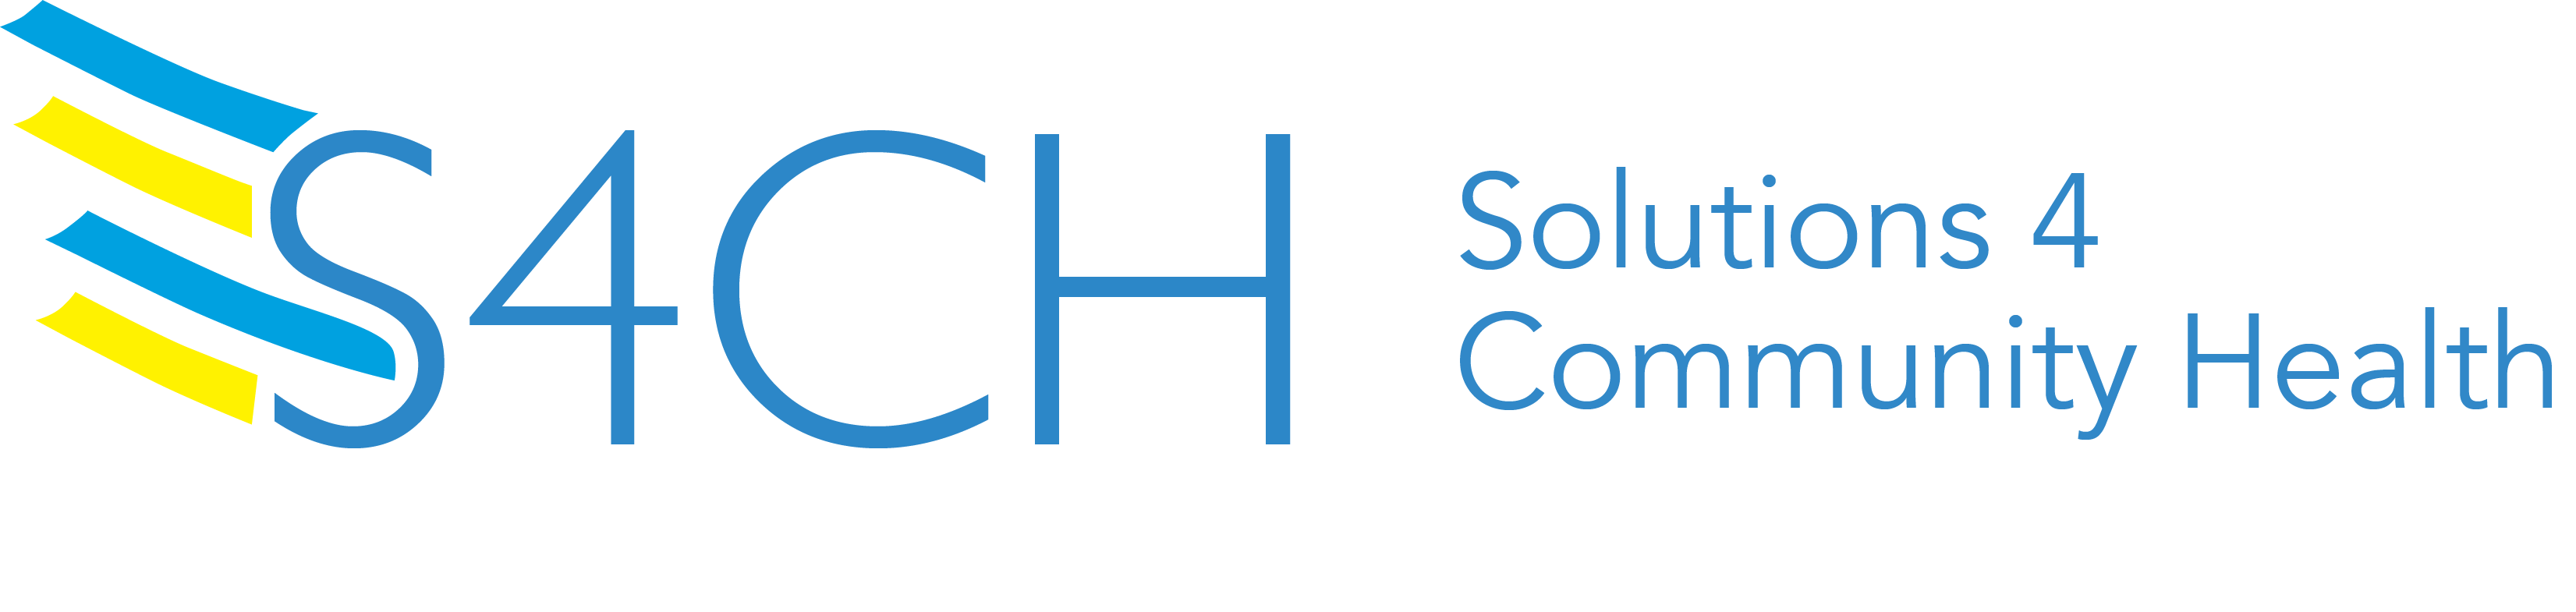 S4CH-logo-SRH-colors-no-tagline